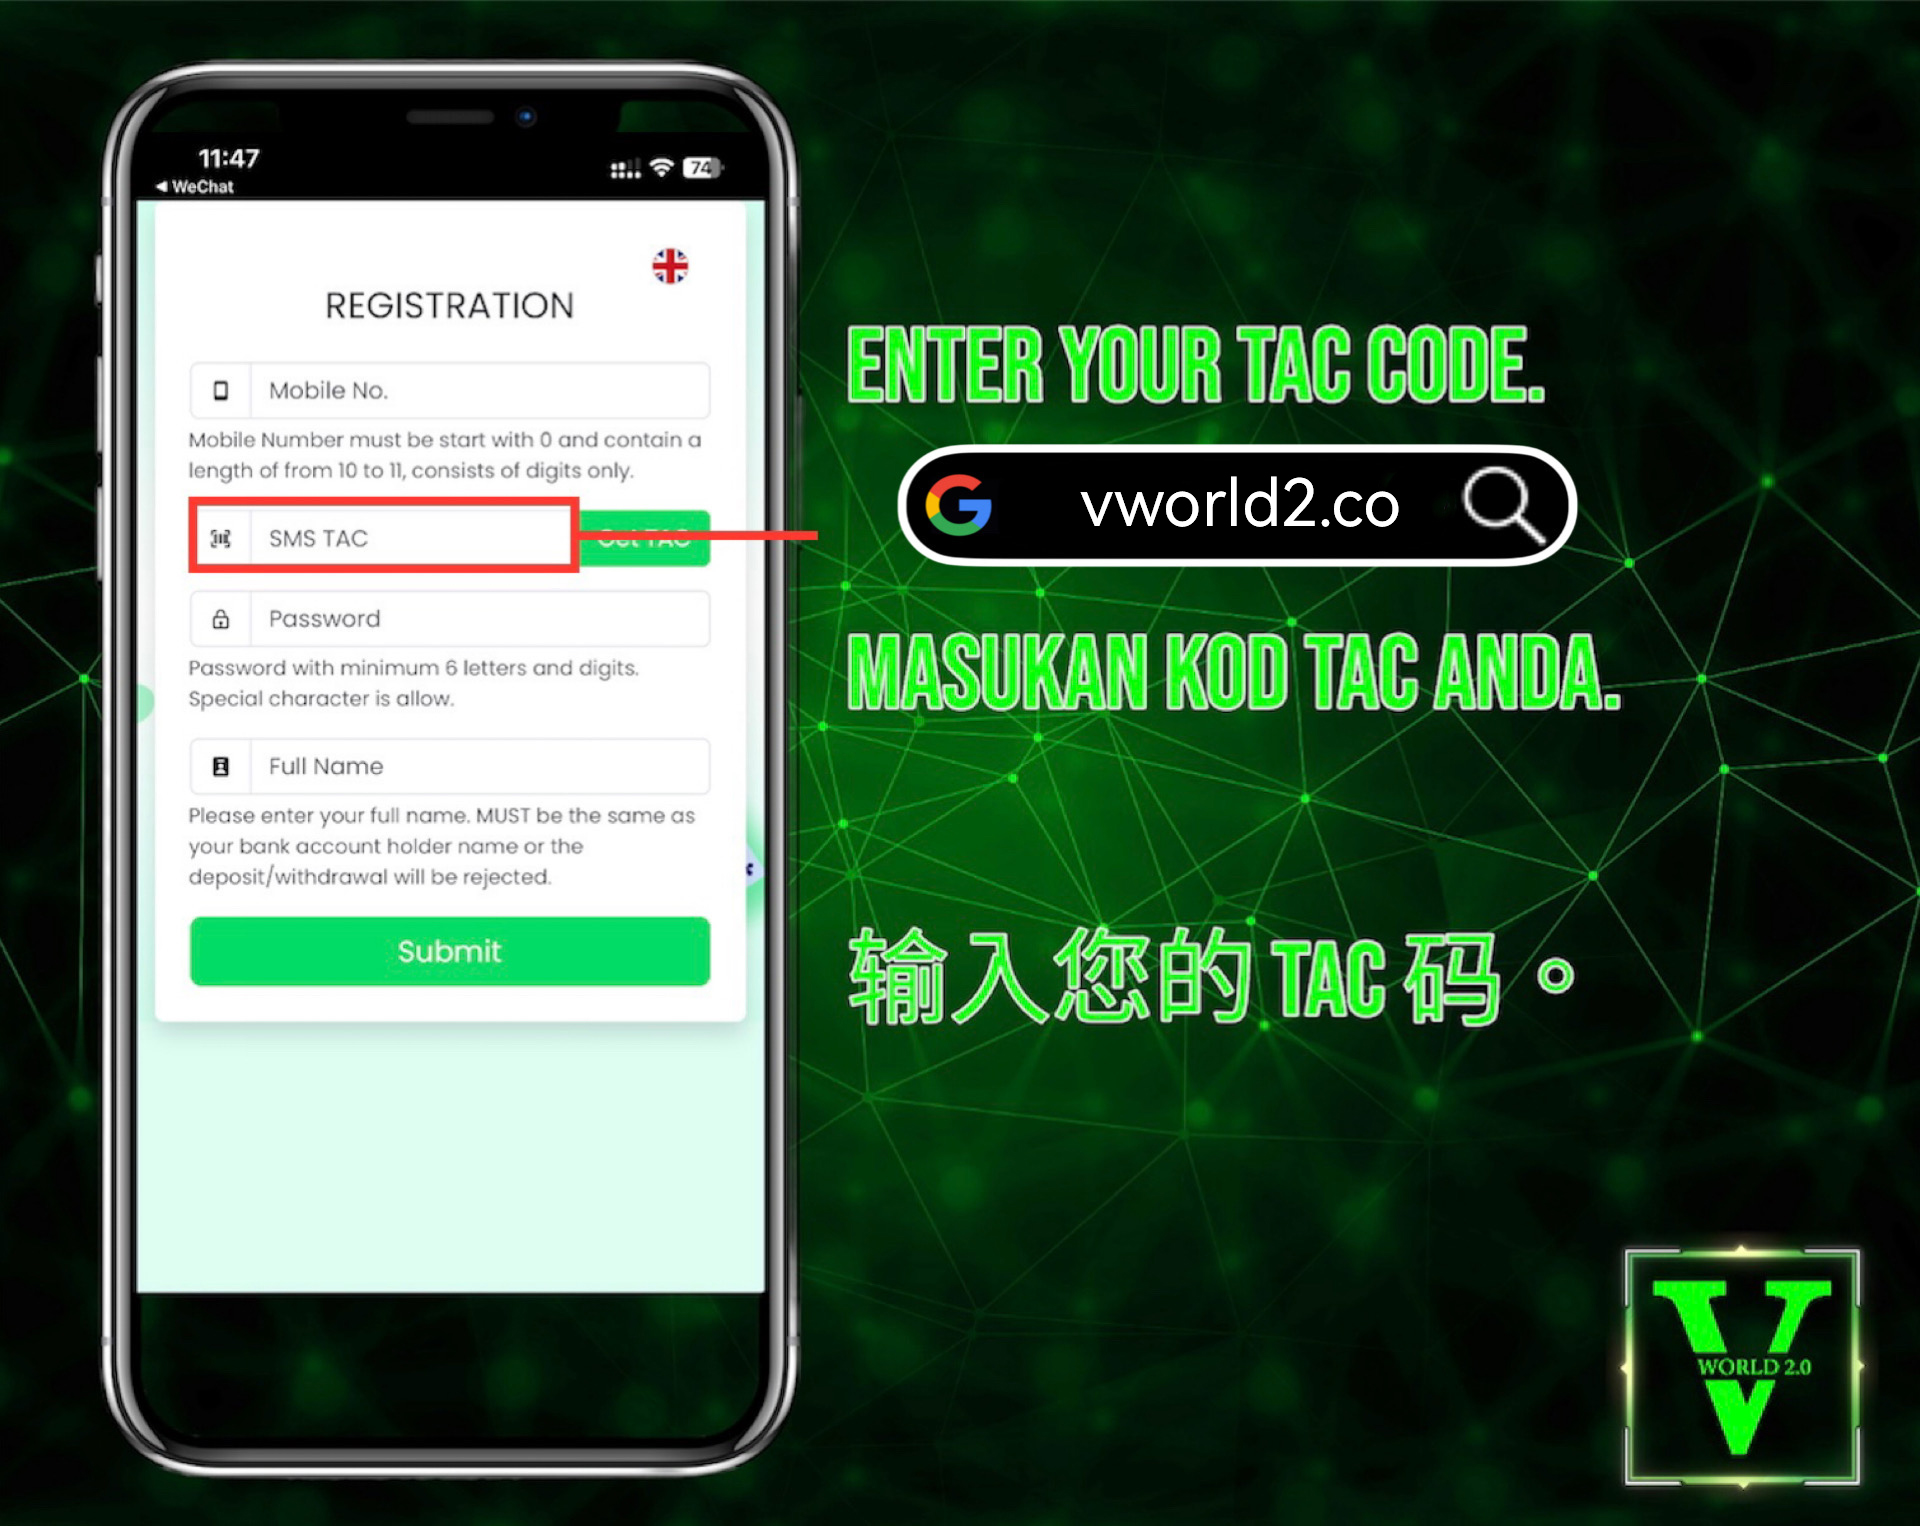 v world 2.0 Registration 2